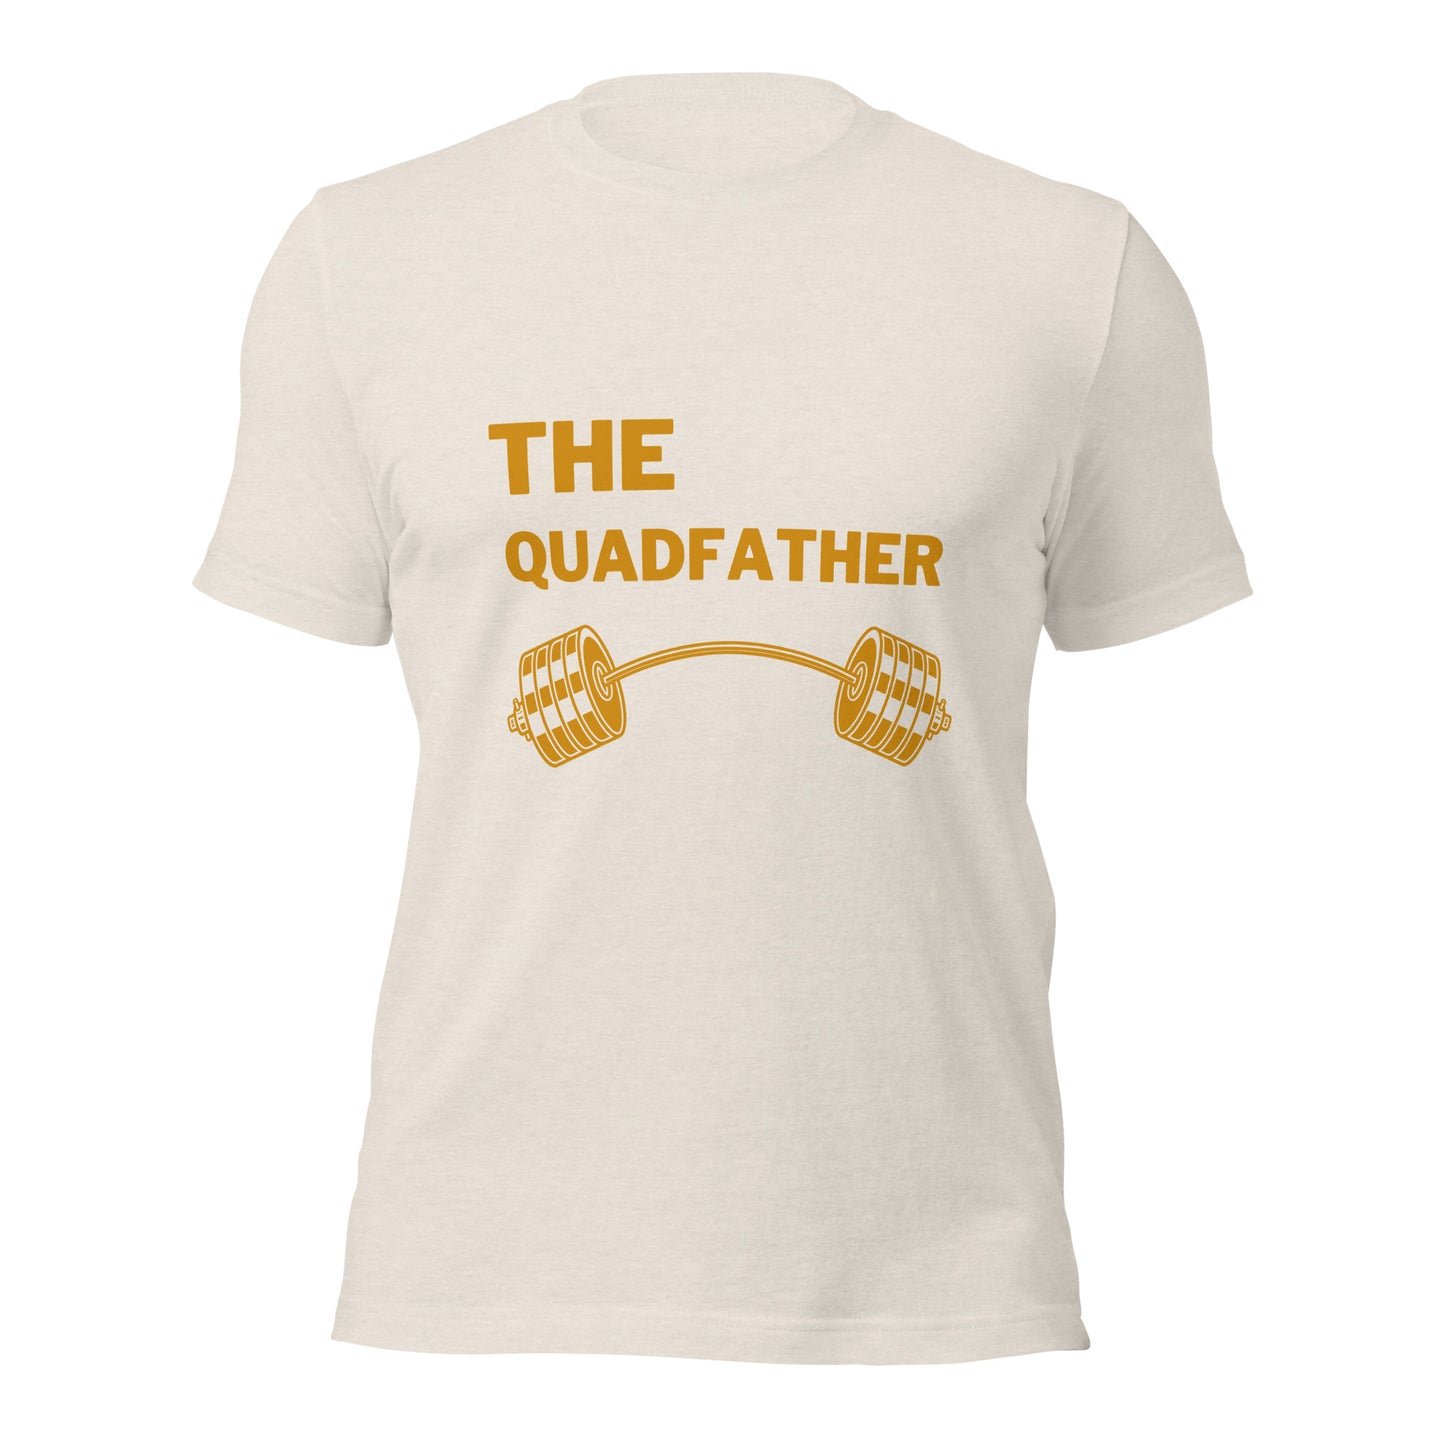 The QUADFATHER T-shirt